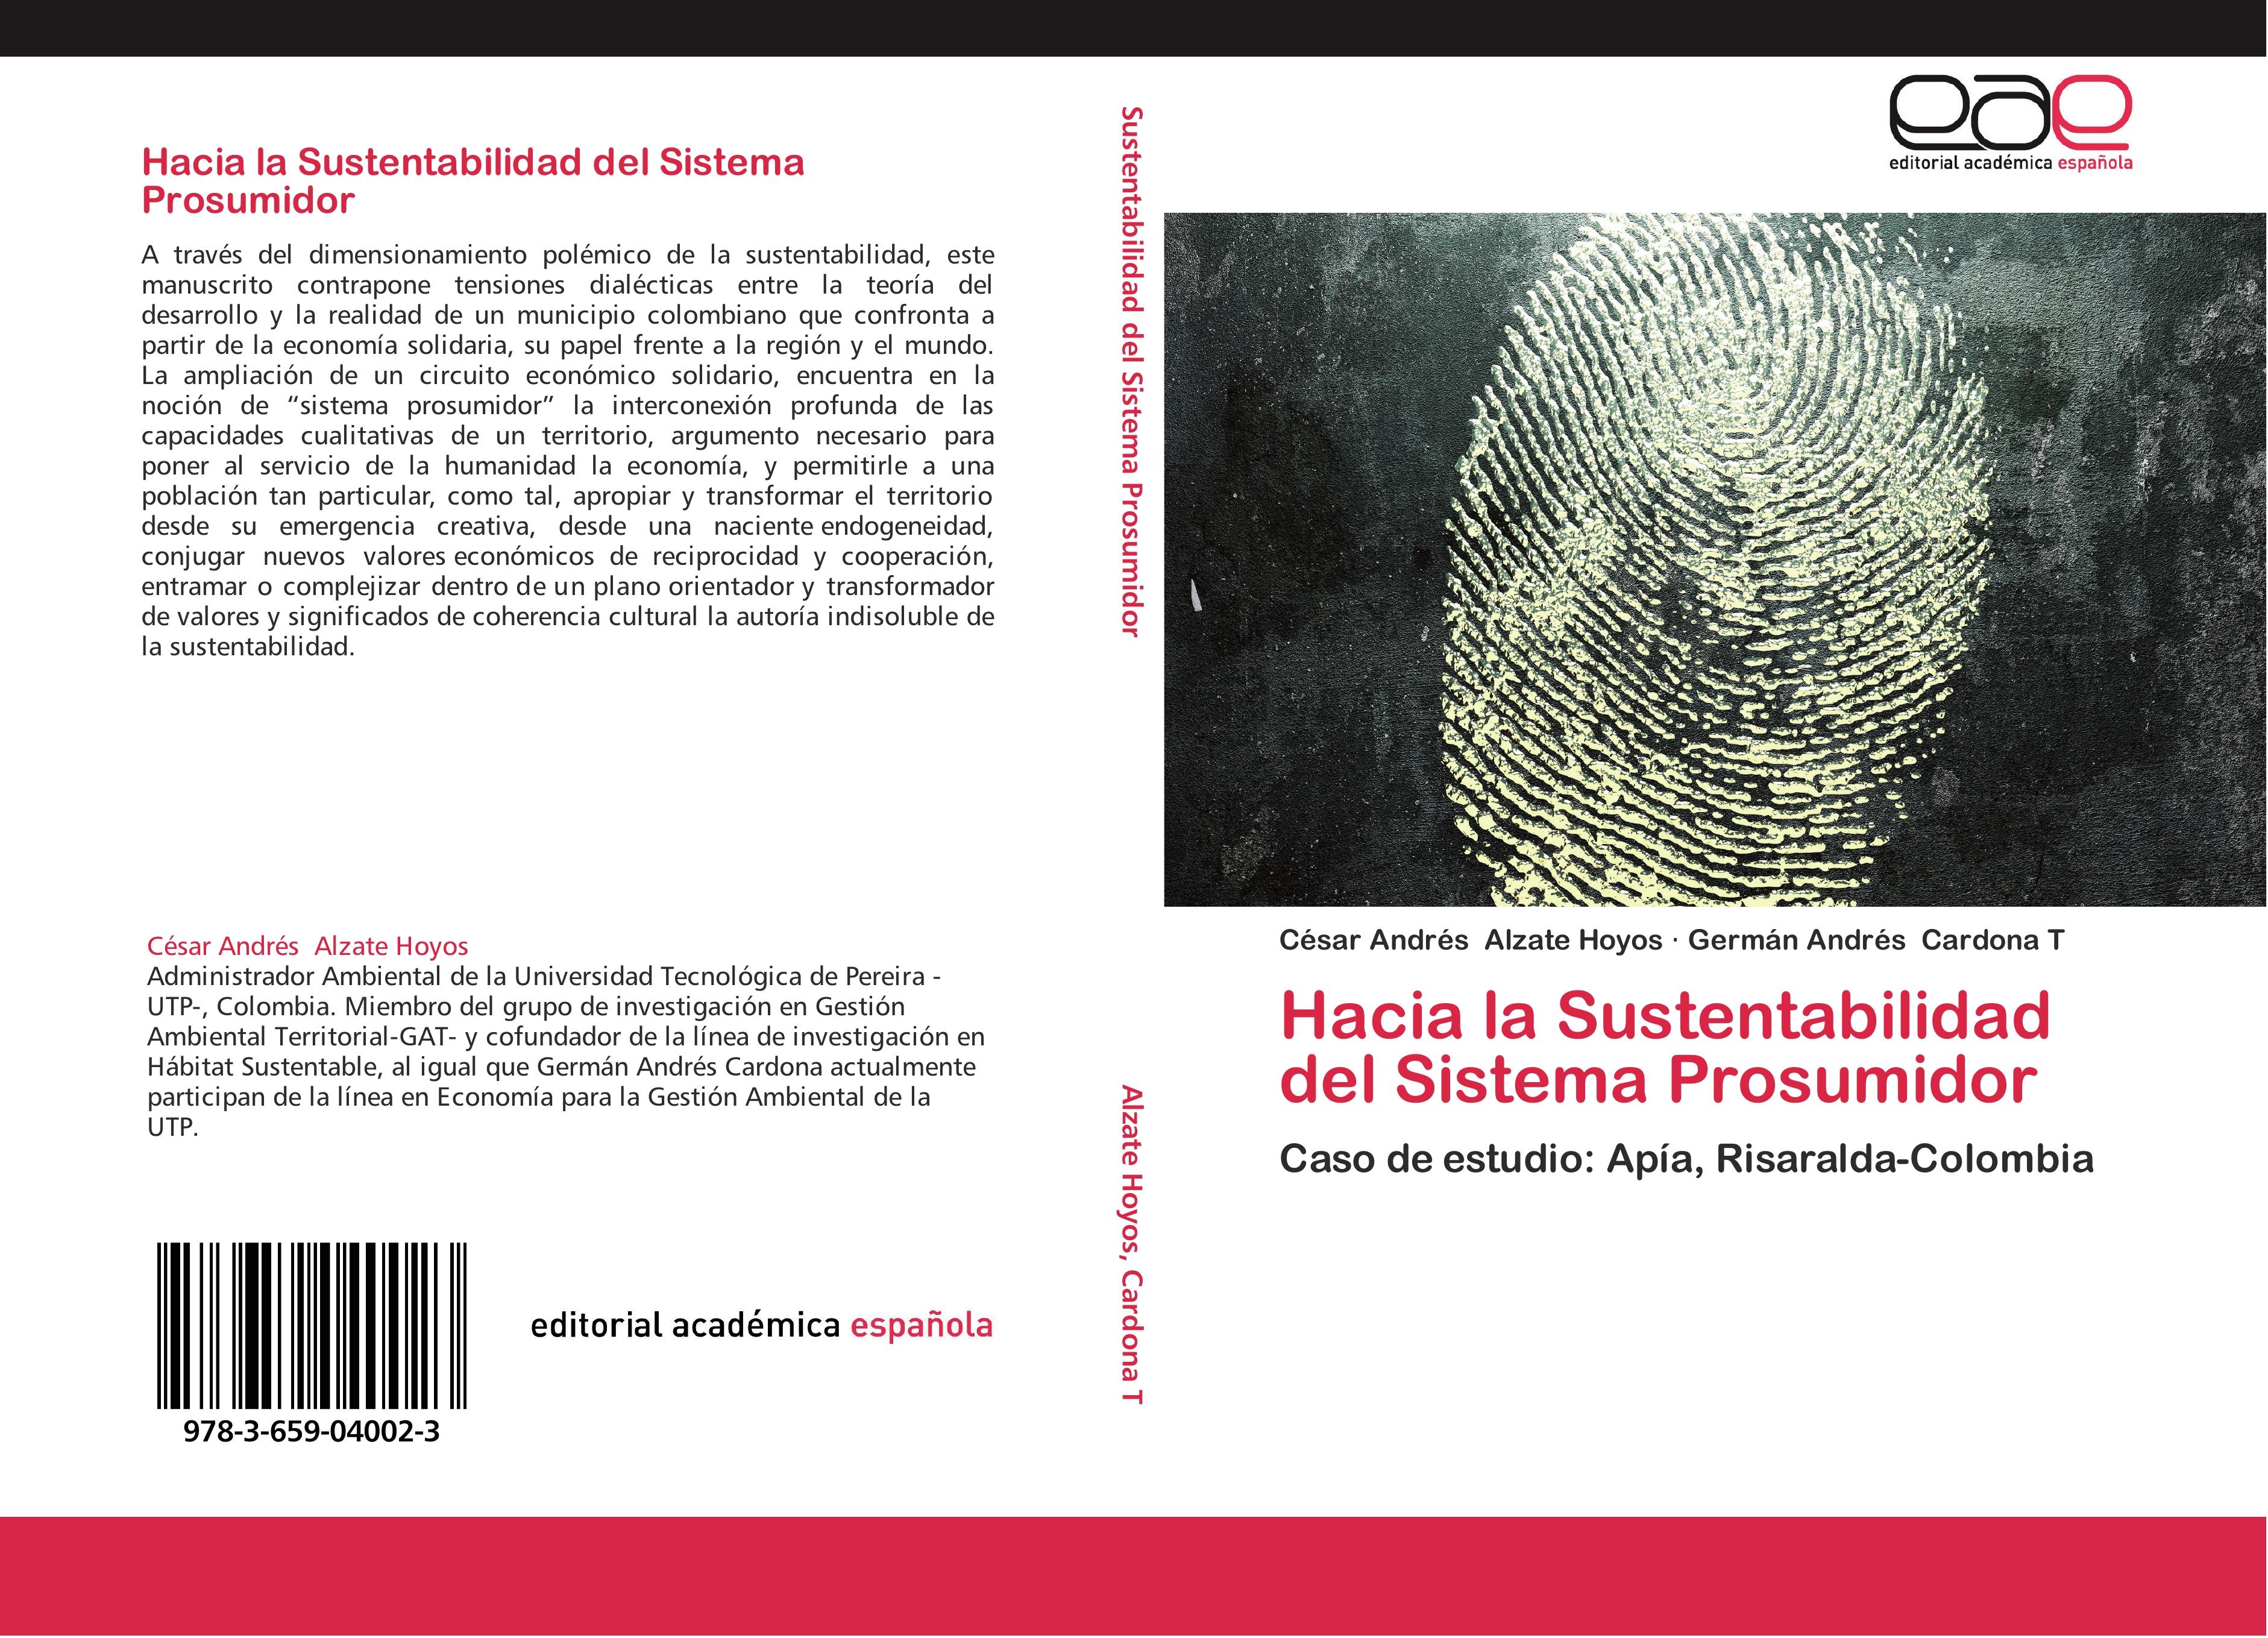 Hacia la Sustentabilidad del Sistema Prosumidor - César Andrés Alzate Hoyos Germán Andrés Cardona T